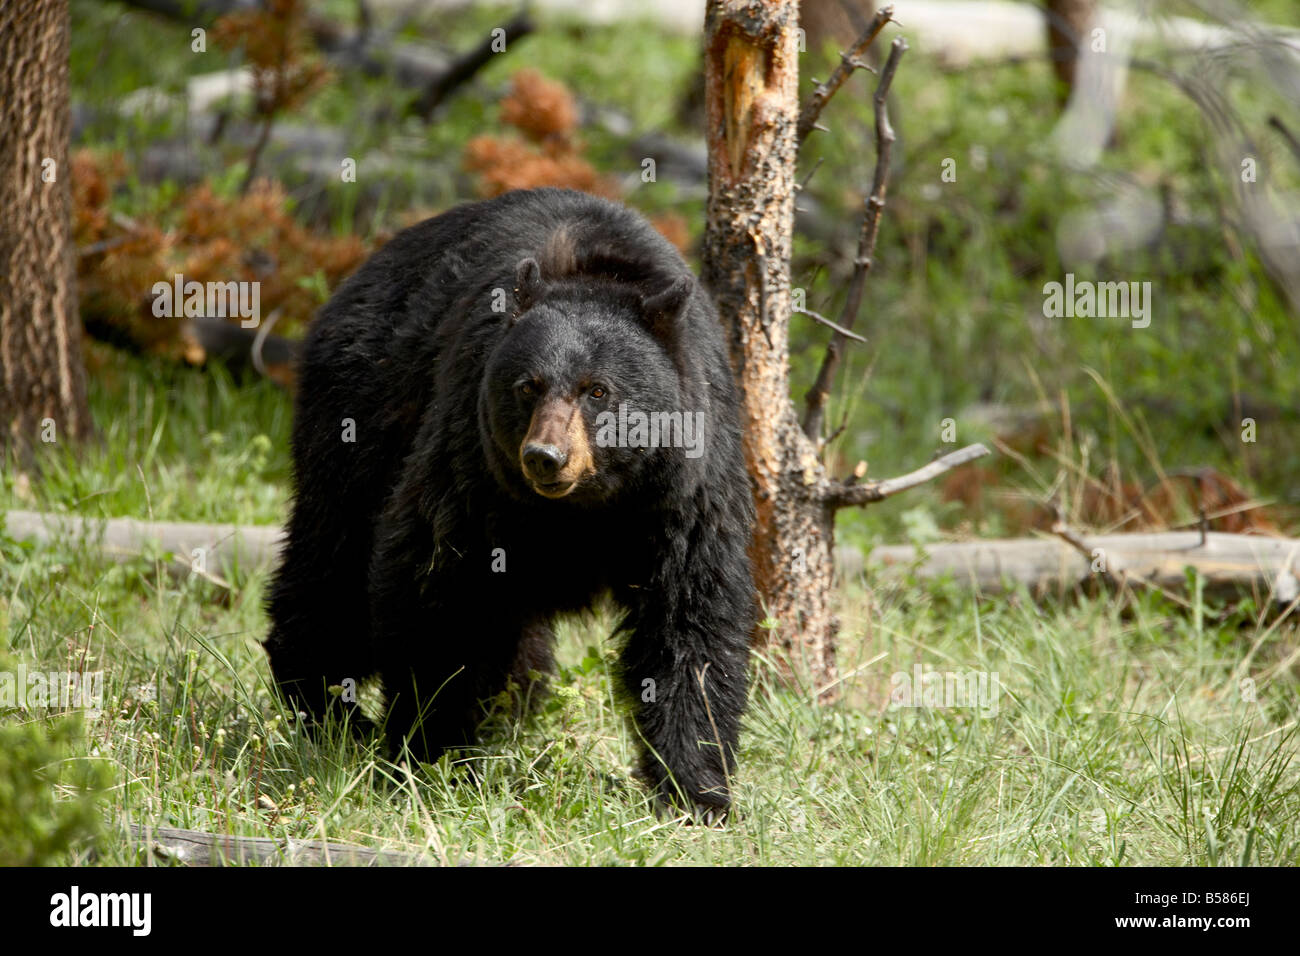 Black bear (Ursus americanus) sow, Yellowstone National Park, Wyoming, United States of America, North America Stock Photo